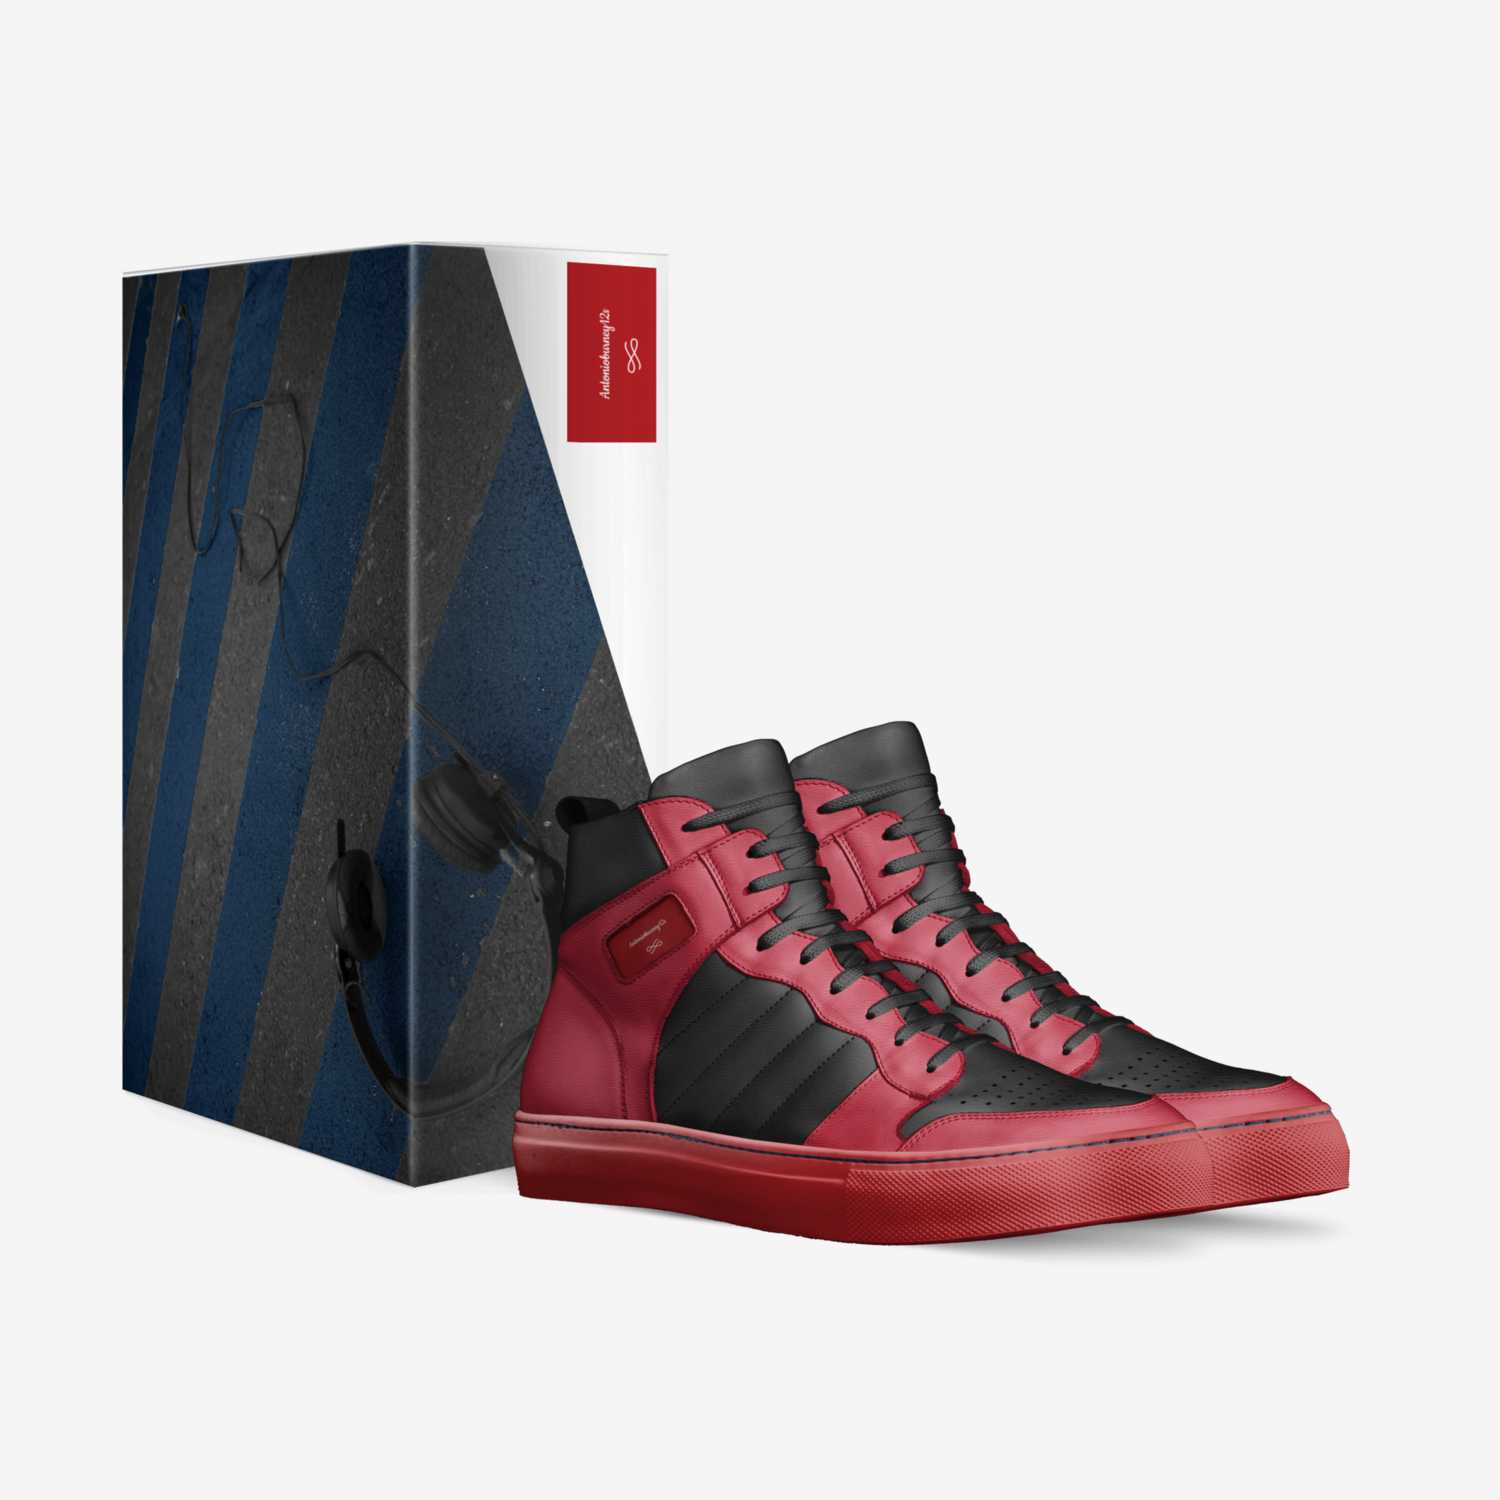 Antonioburney12s custom made in Italy shoes by Draneka Bivins | Box view